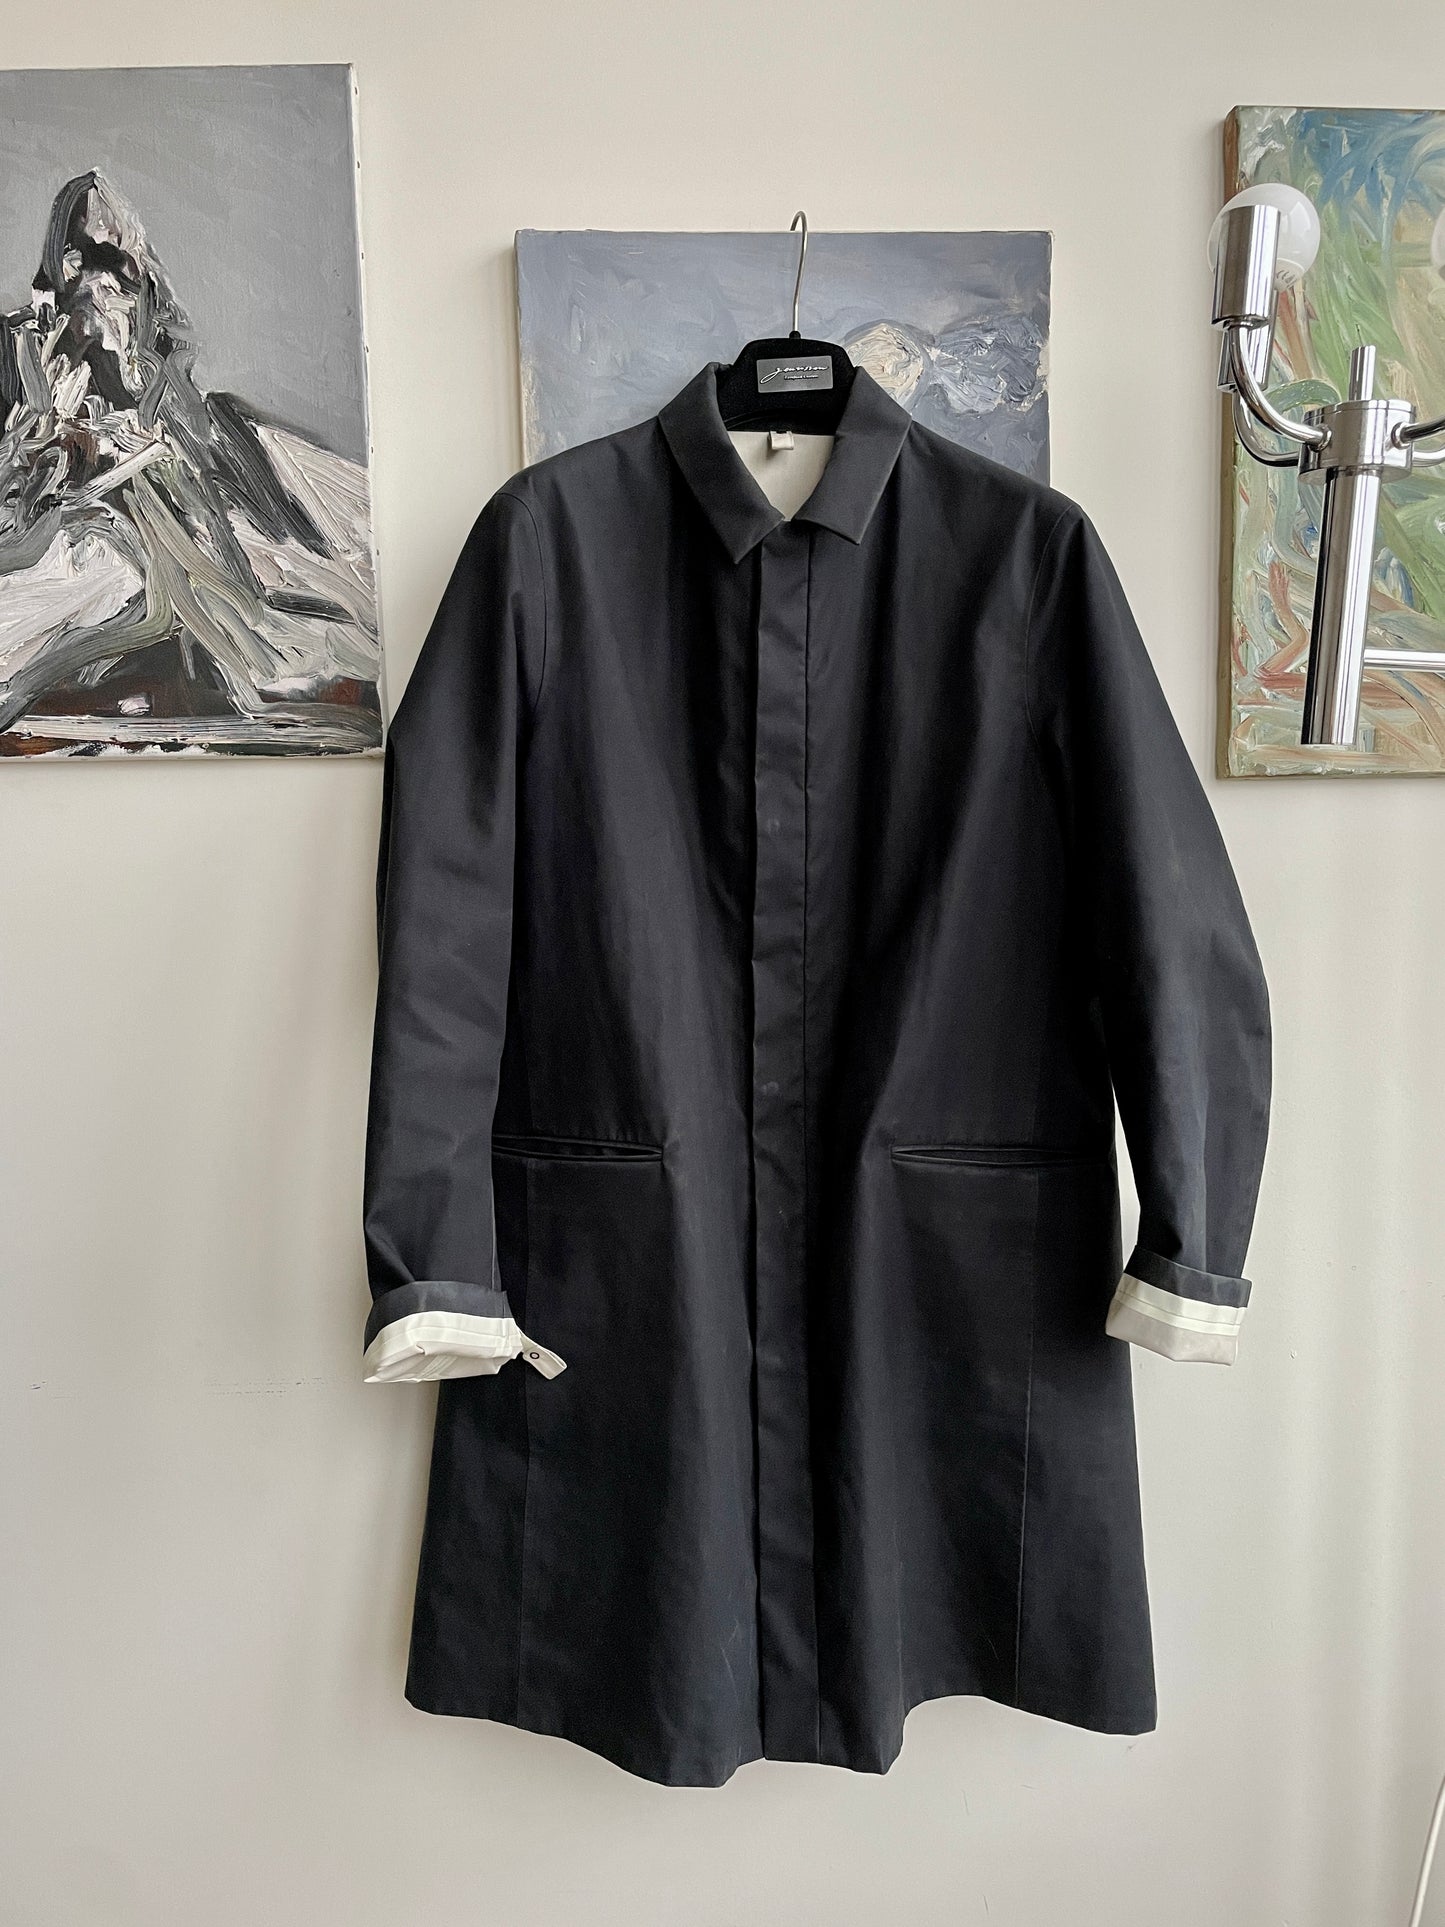 Prada 2007 men's waxed cotton raincoat in navy